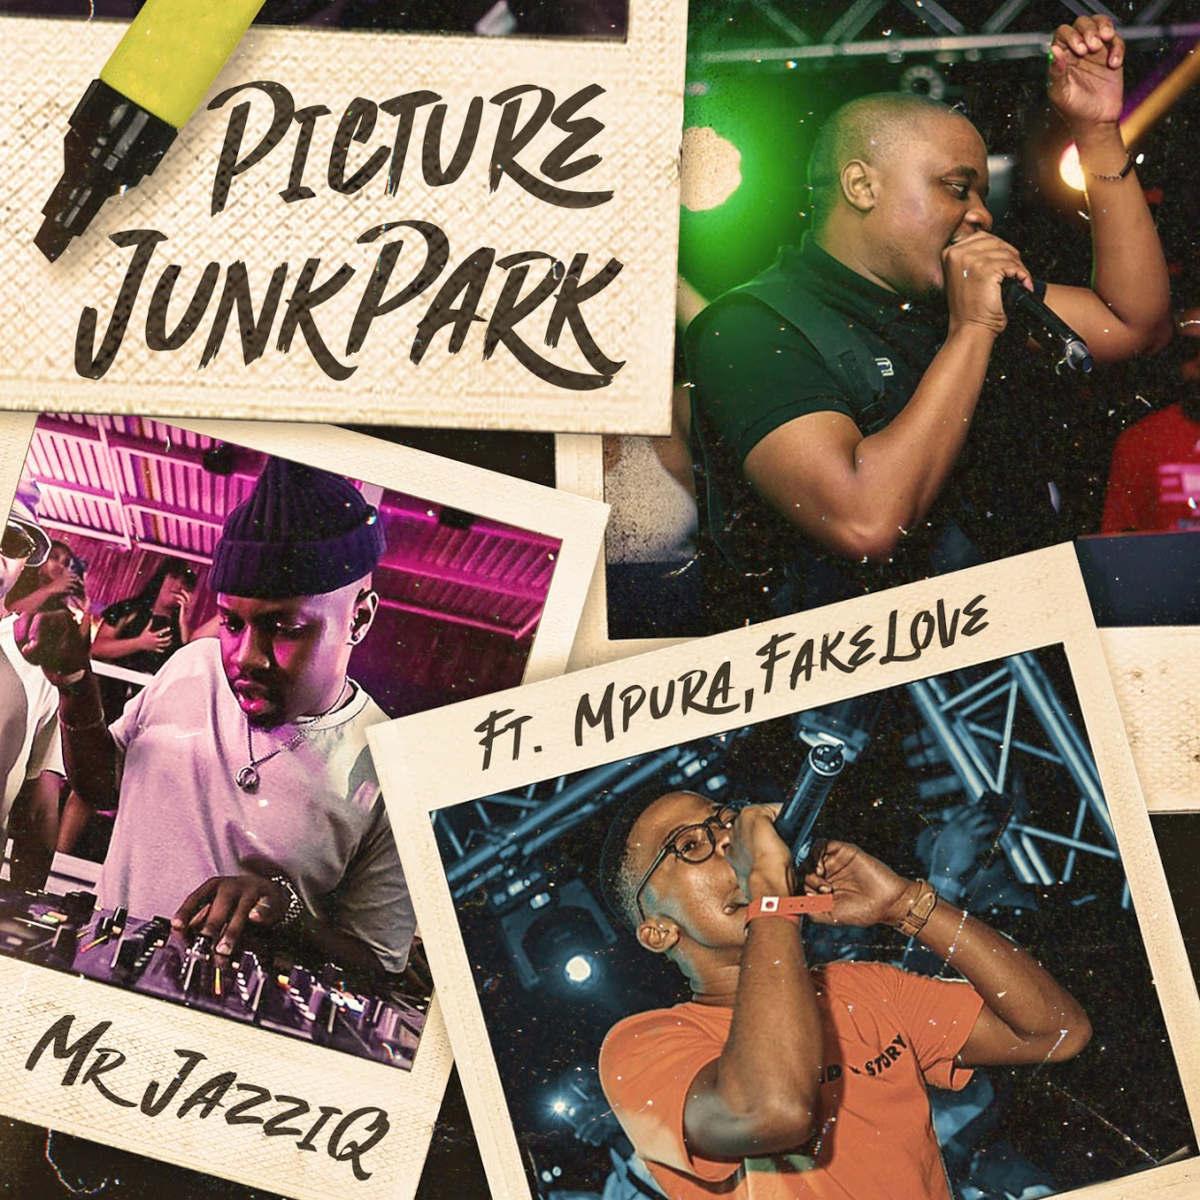 Mr JazziQ - Picture JunkPark (feat. Mpura & Fakelove)